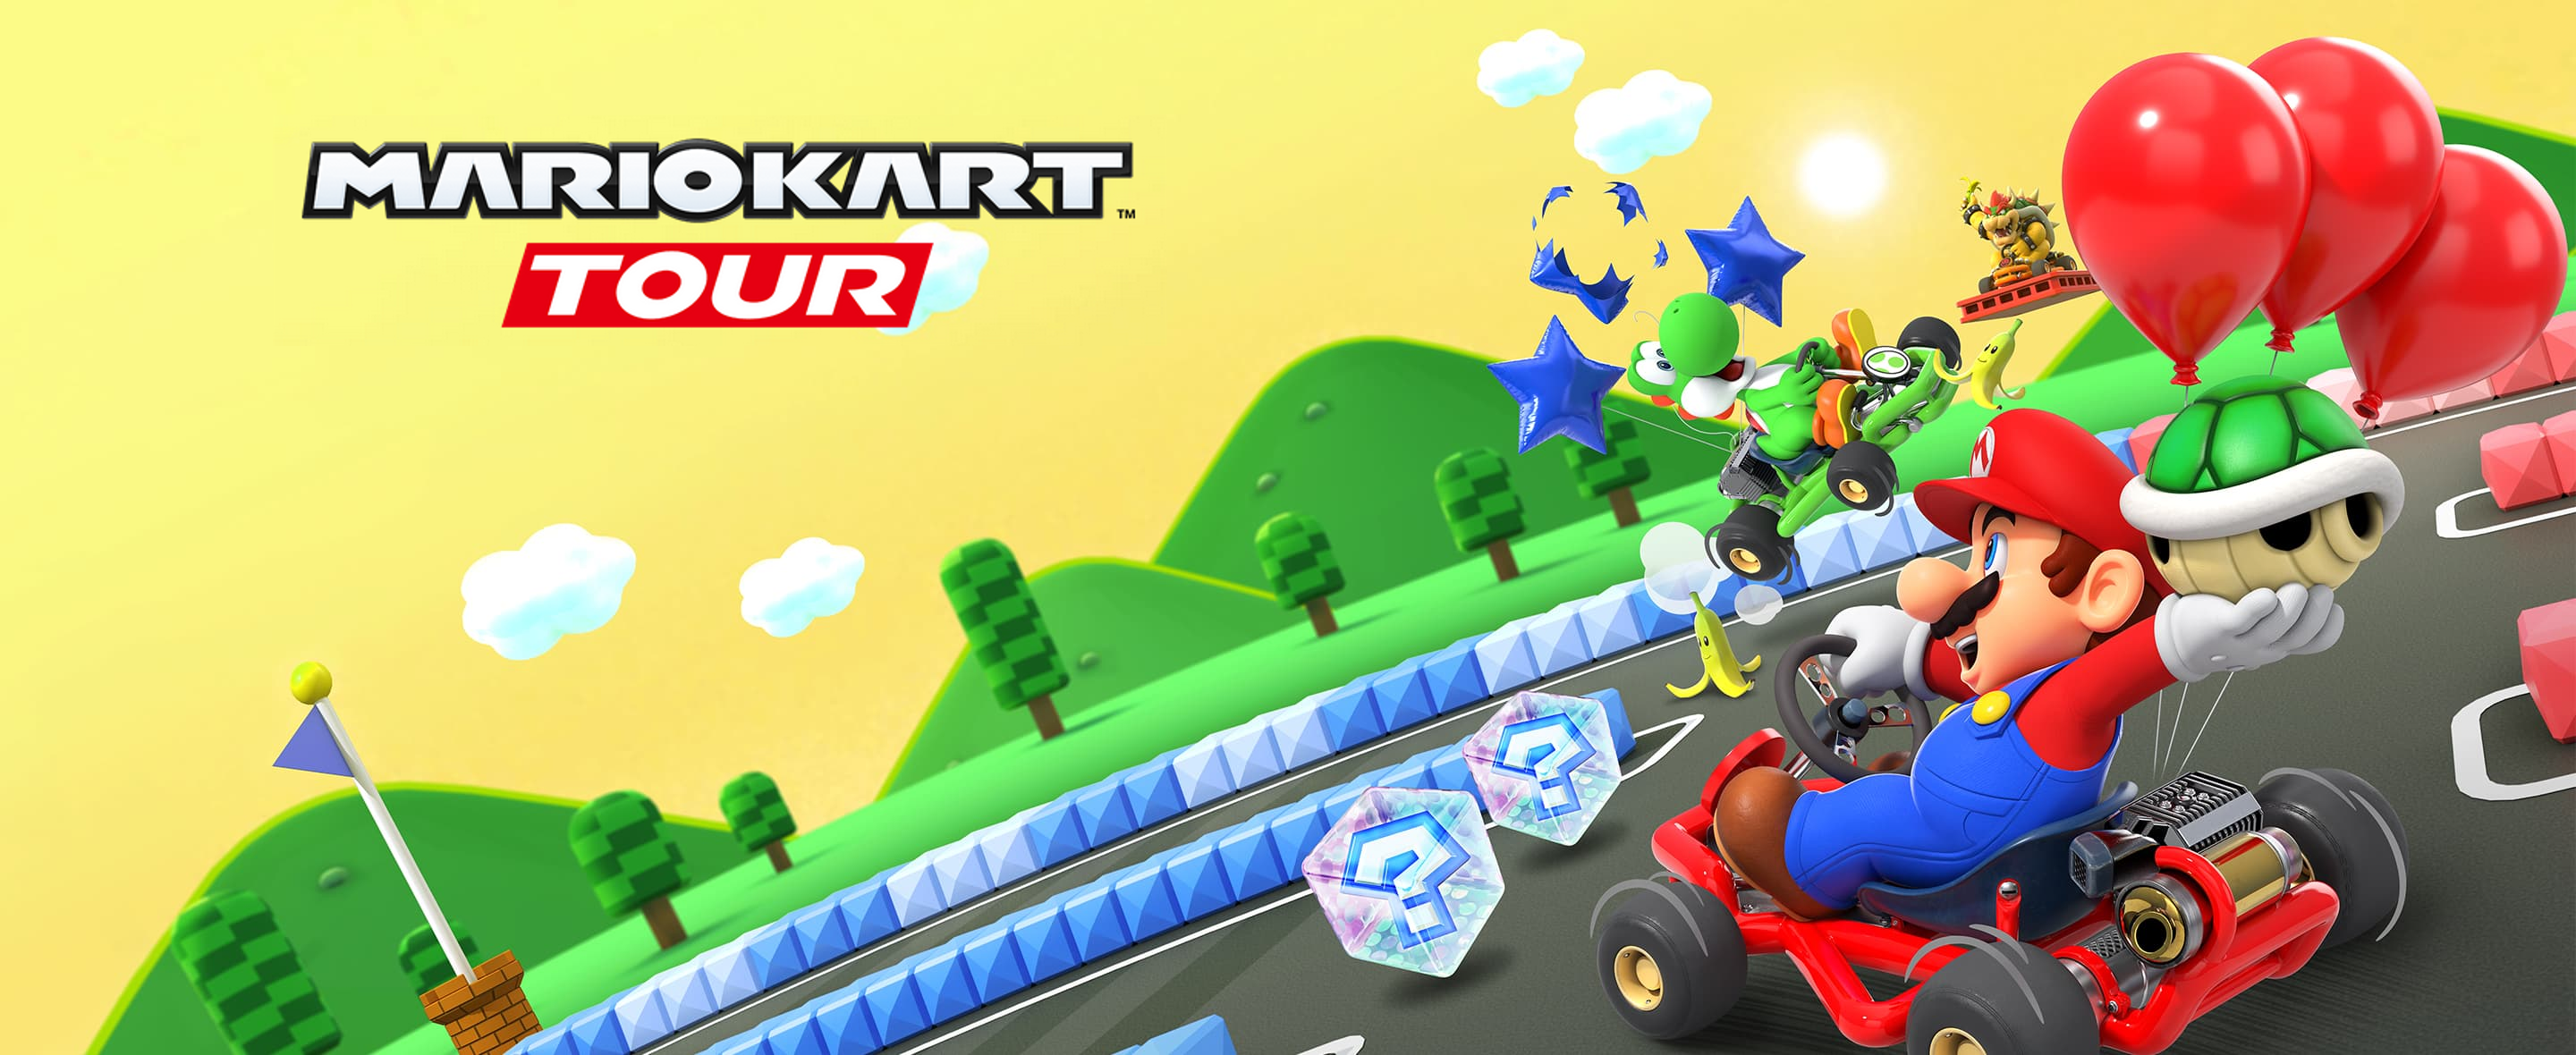 Nintendo Ends Support For Mario Kart Tour